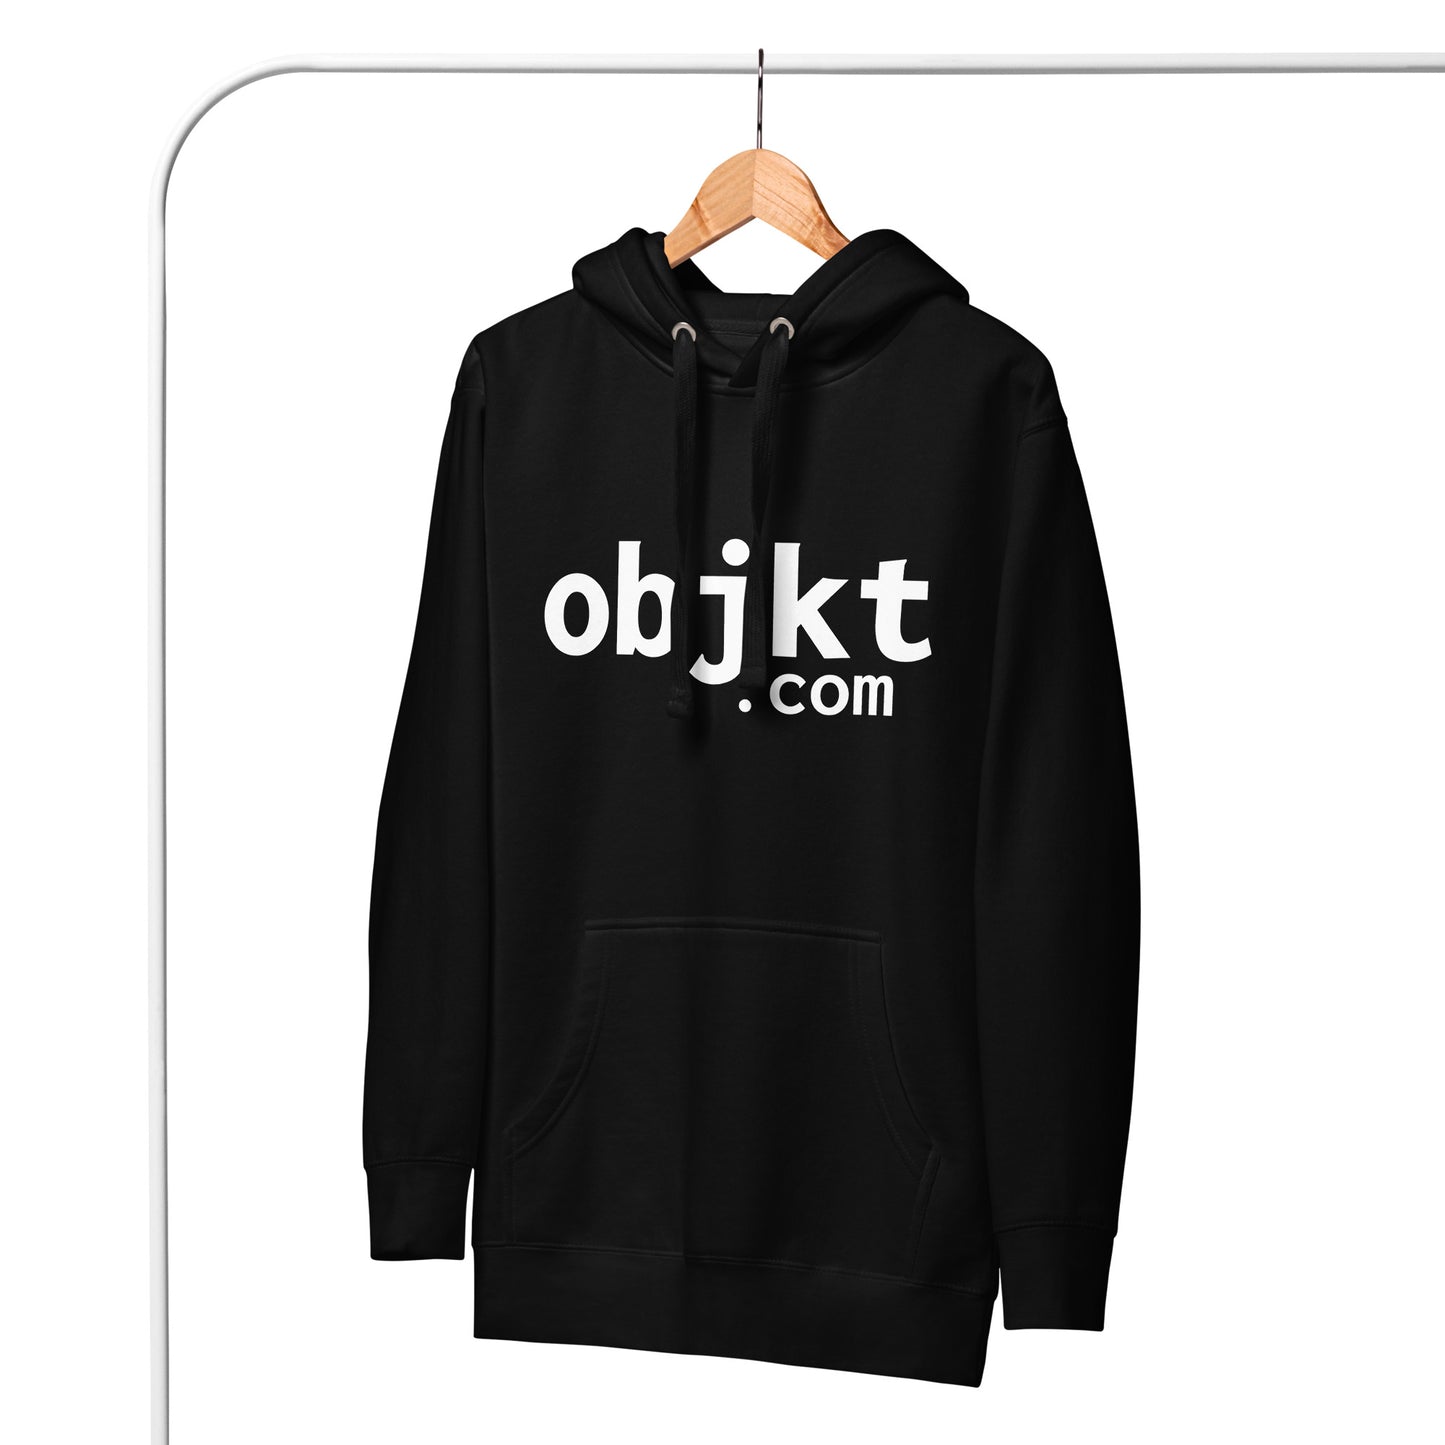 objkt.com original unisex hoodie